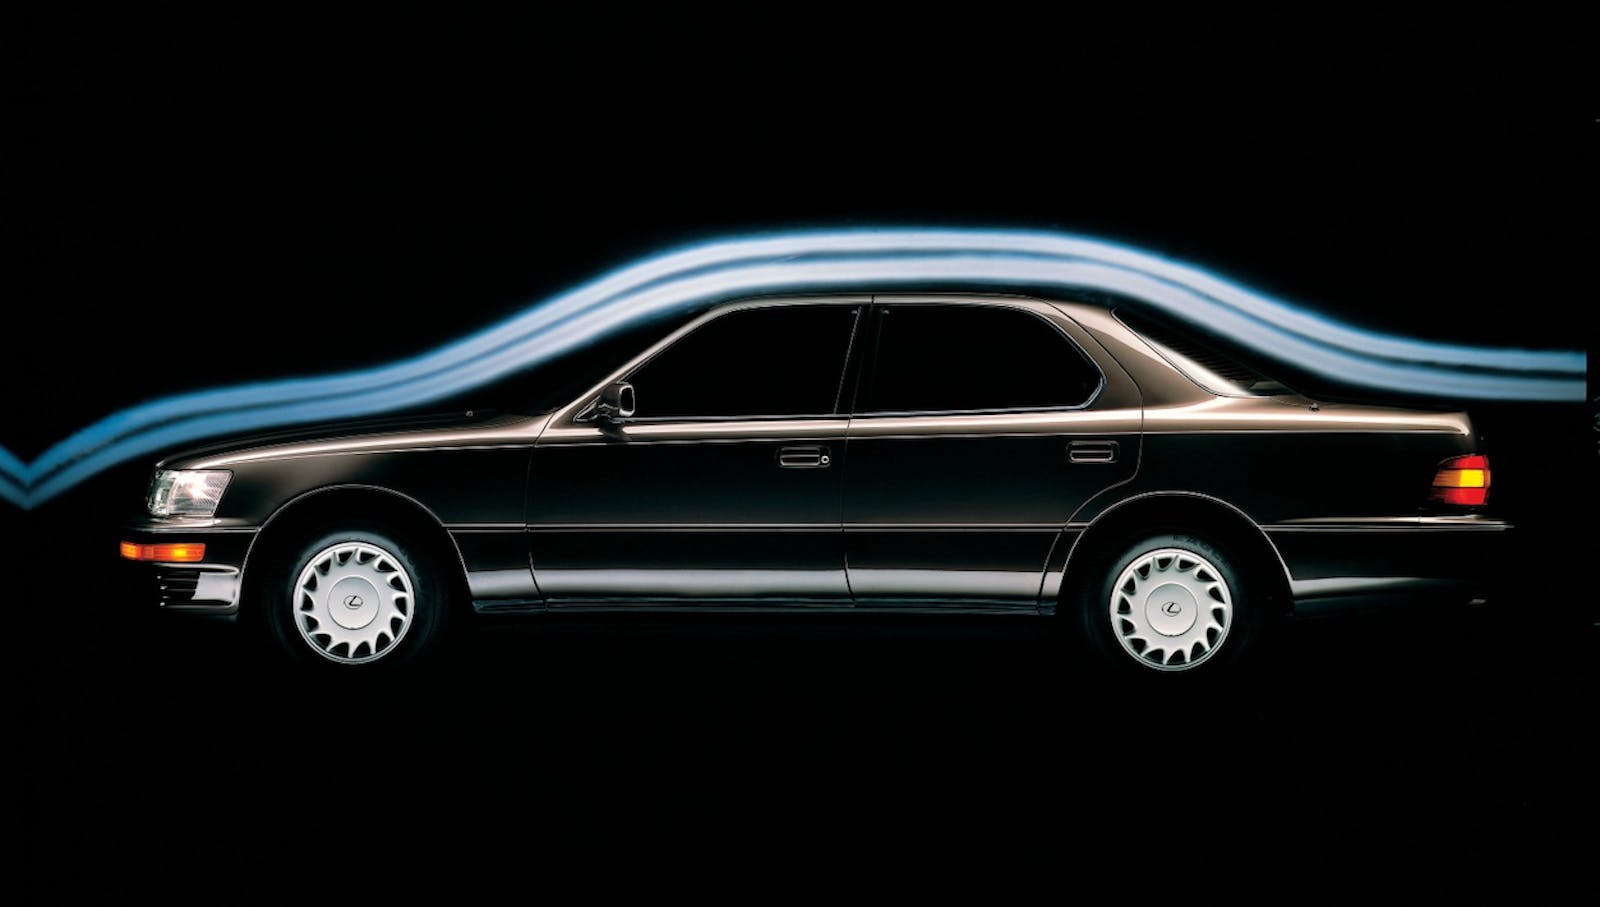 The Lexus LS400 blew everyone away in 1990 - Hagerty Media